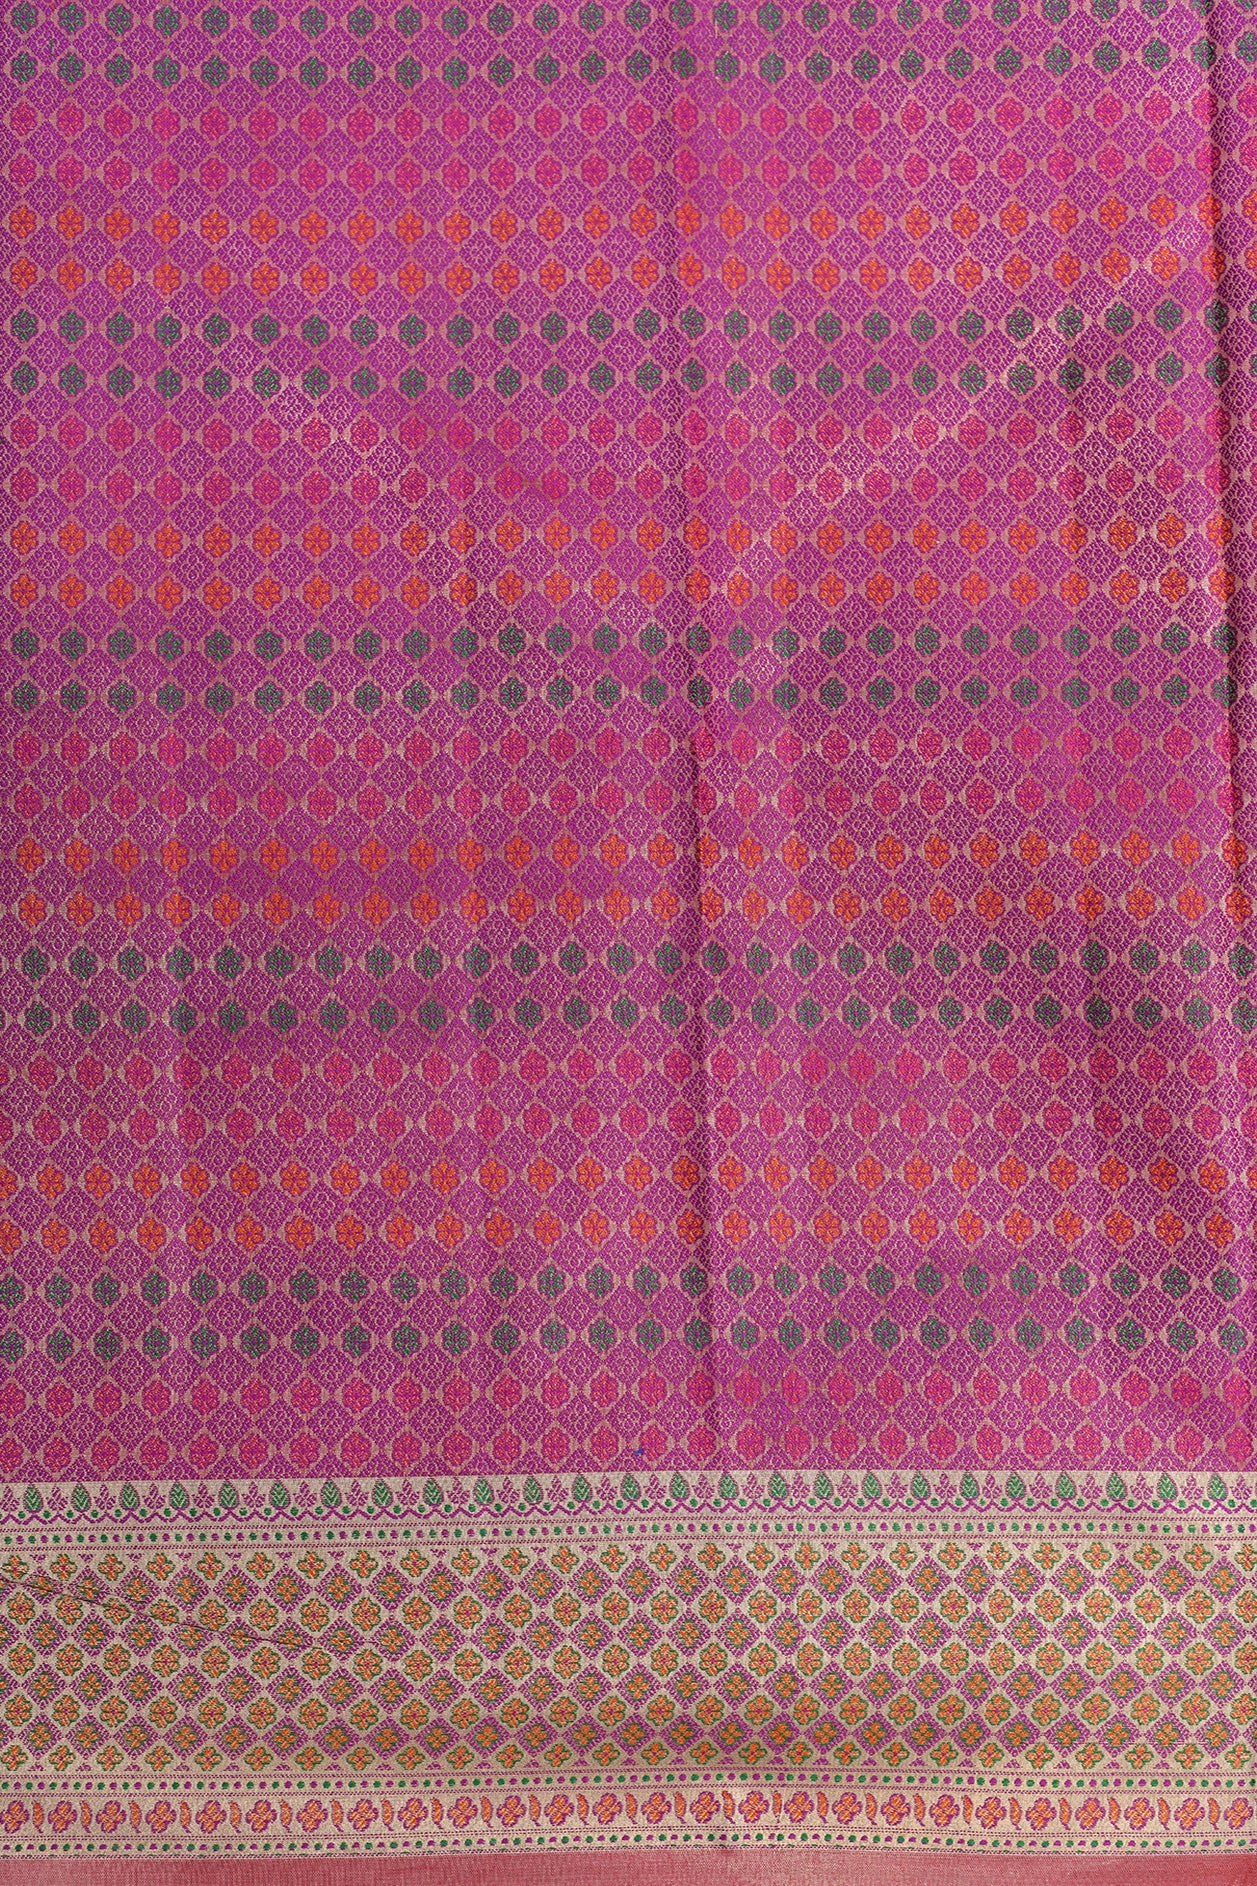 Meenakari Work Border In Plain Pink Raw Silk Saree